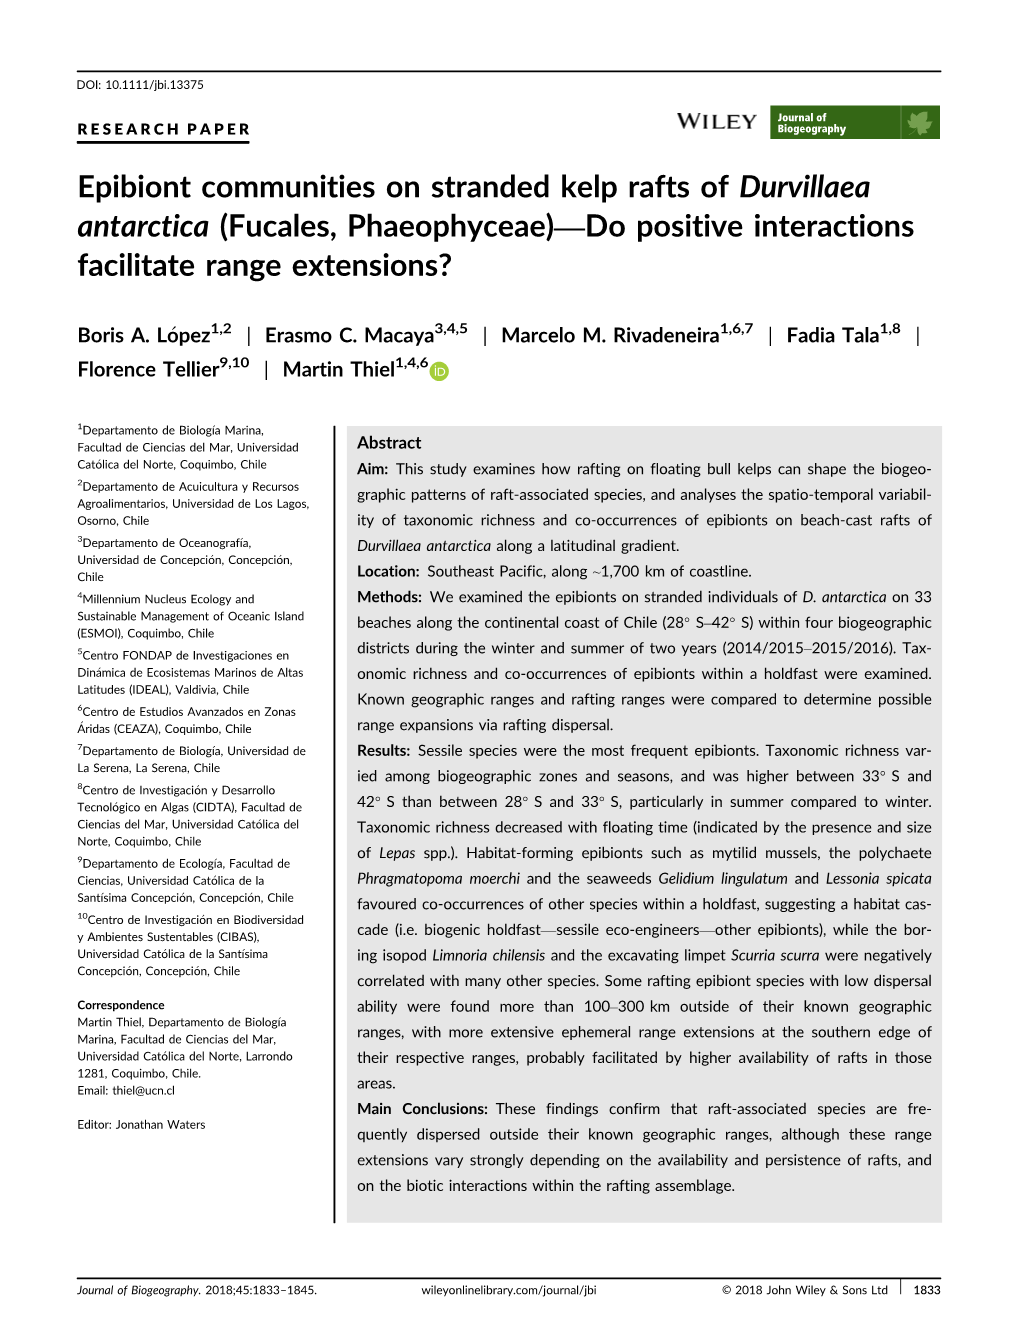 Epibiont Communities on Stranded Kelp Rafts of Durvillaea Antarctica (Fucales, Phaeophyceae)—Do Positive Interactions Facilitate Range Extensions?